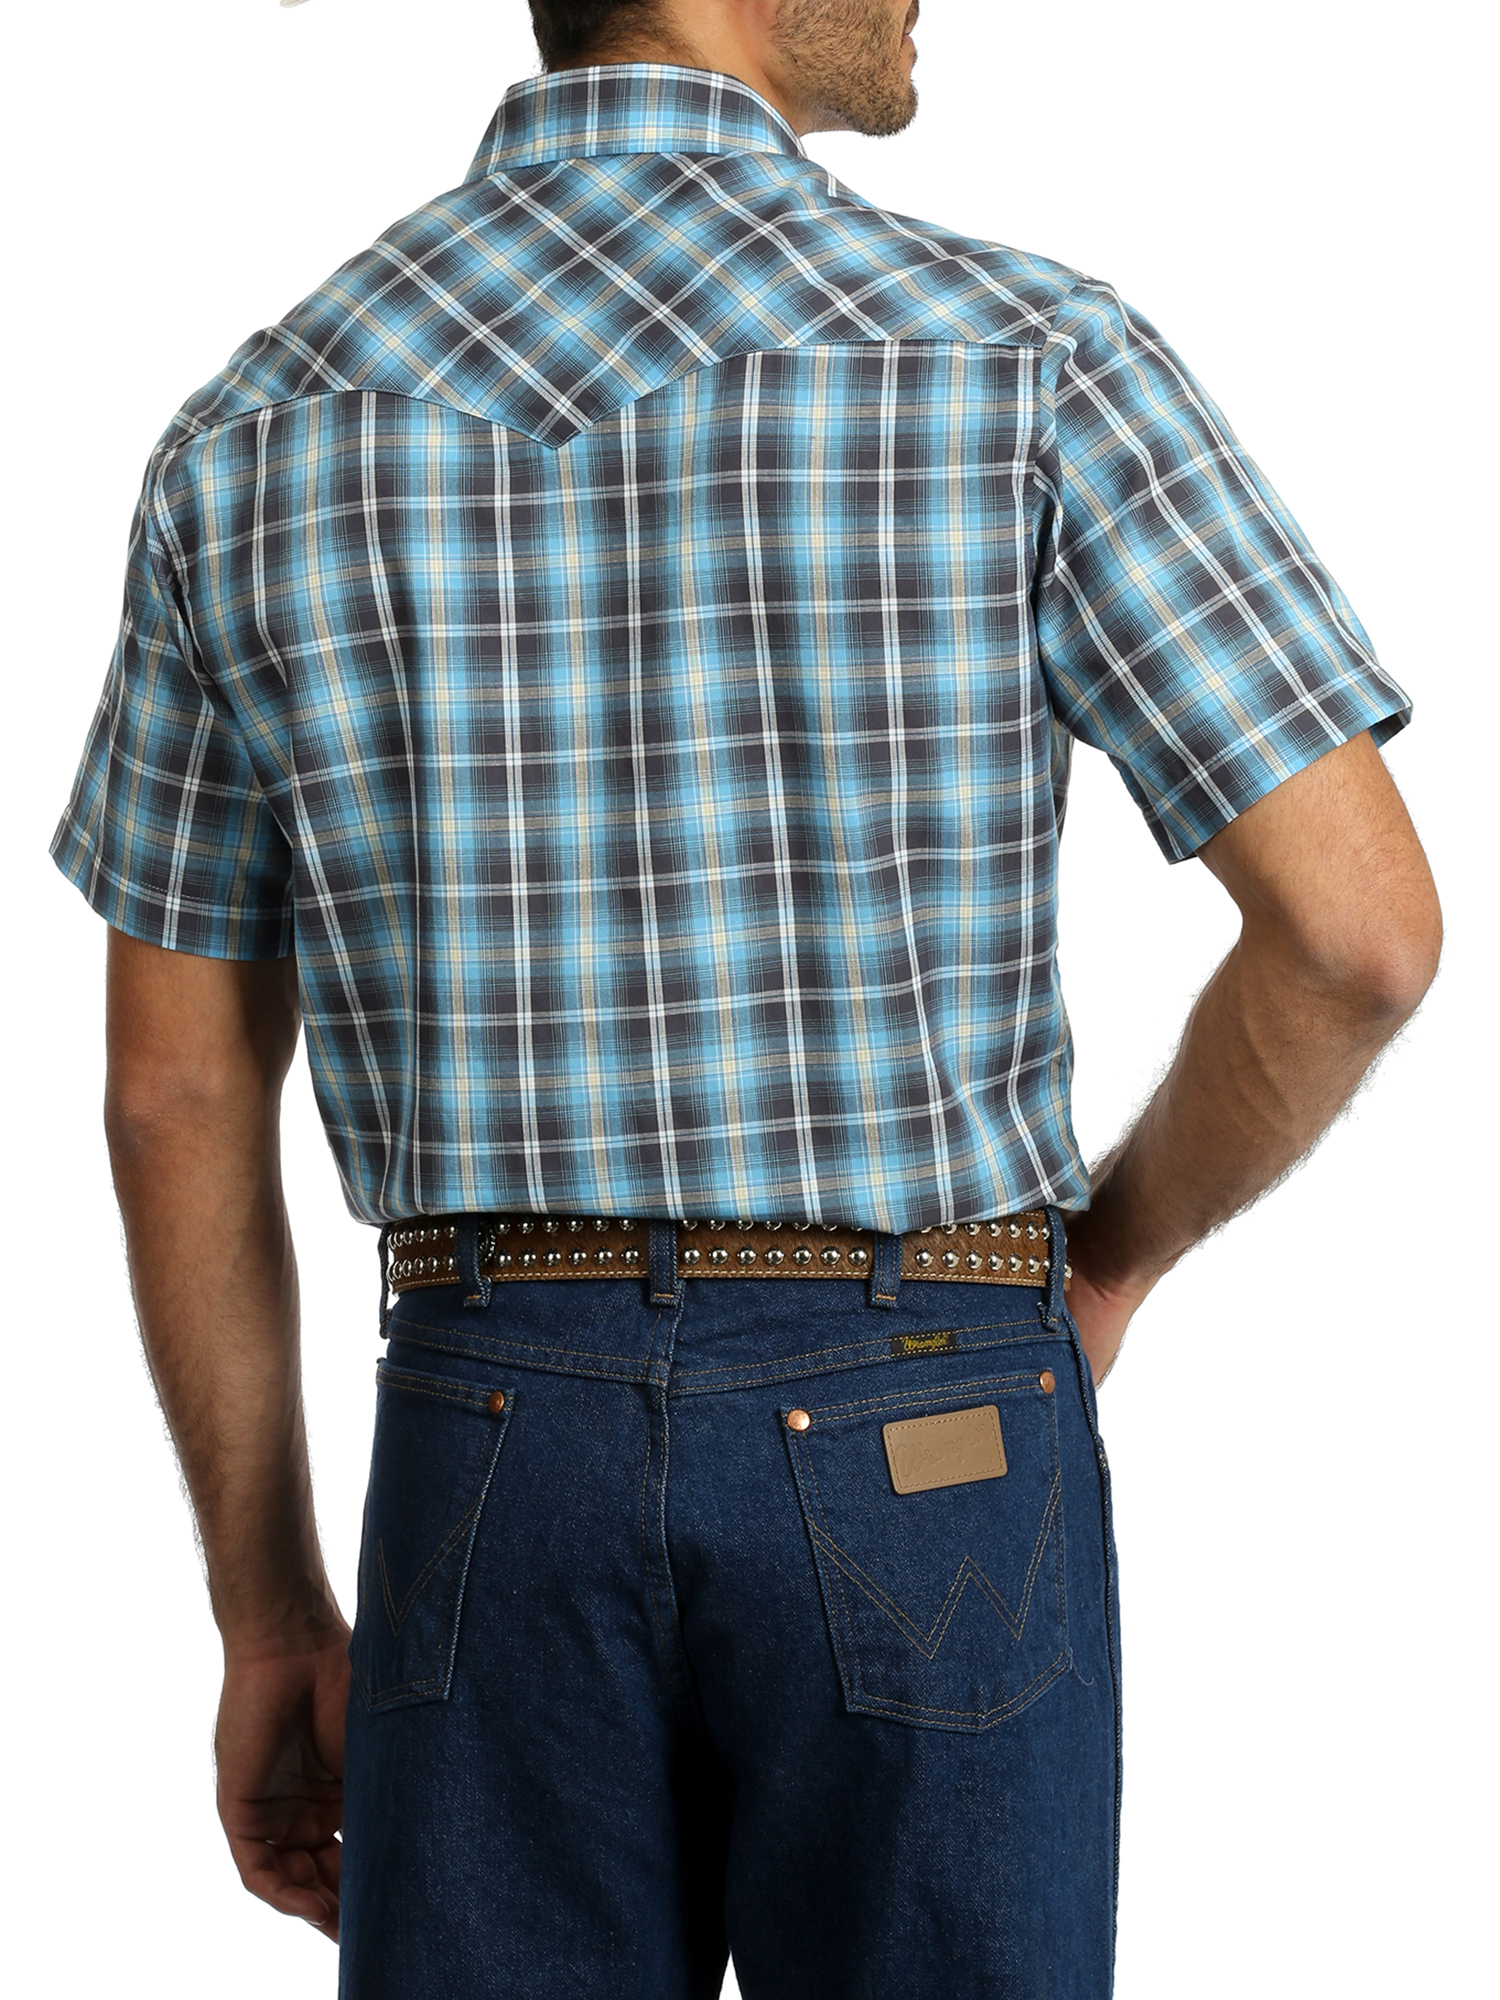 Wrangler Men's and Big Men's Short Sleeve Plaid Western Shirt - image 2 of 3